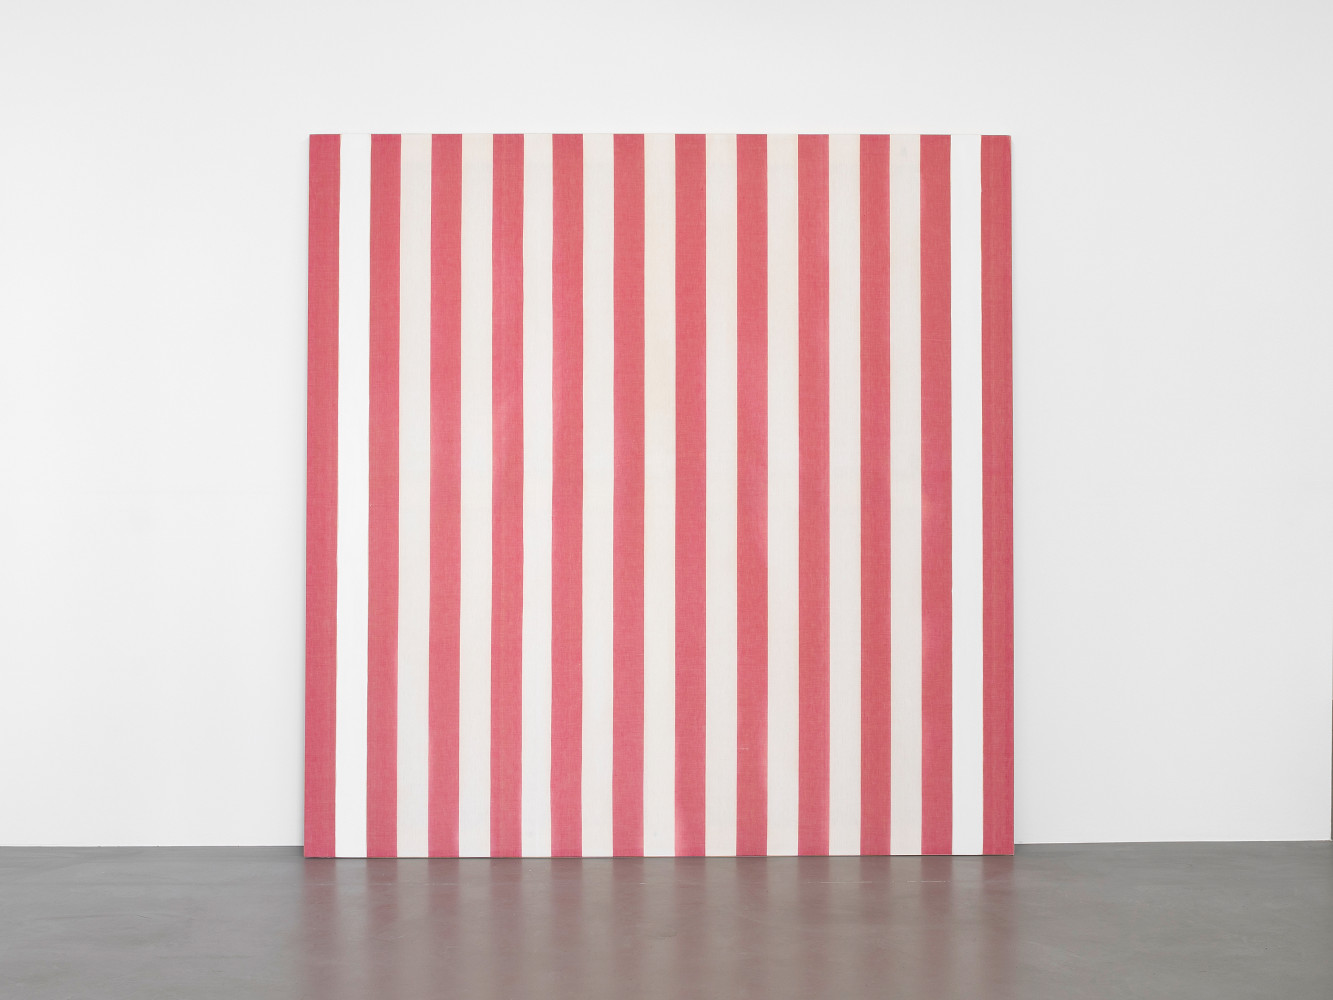 Daniel Buren, ‘Peinture acrylique blanche sur tissu rayé blanc et rouge’, 1969, Acryl auf Markisenstoff